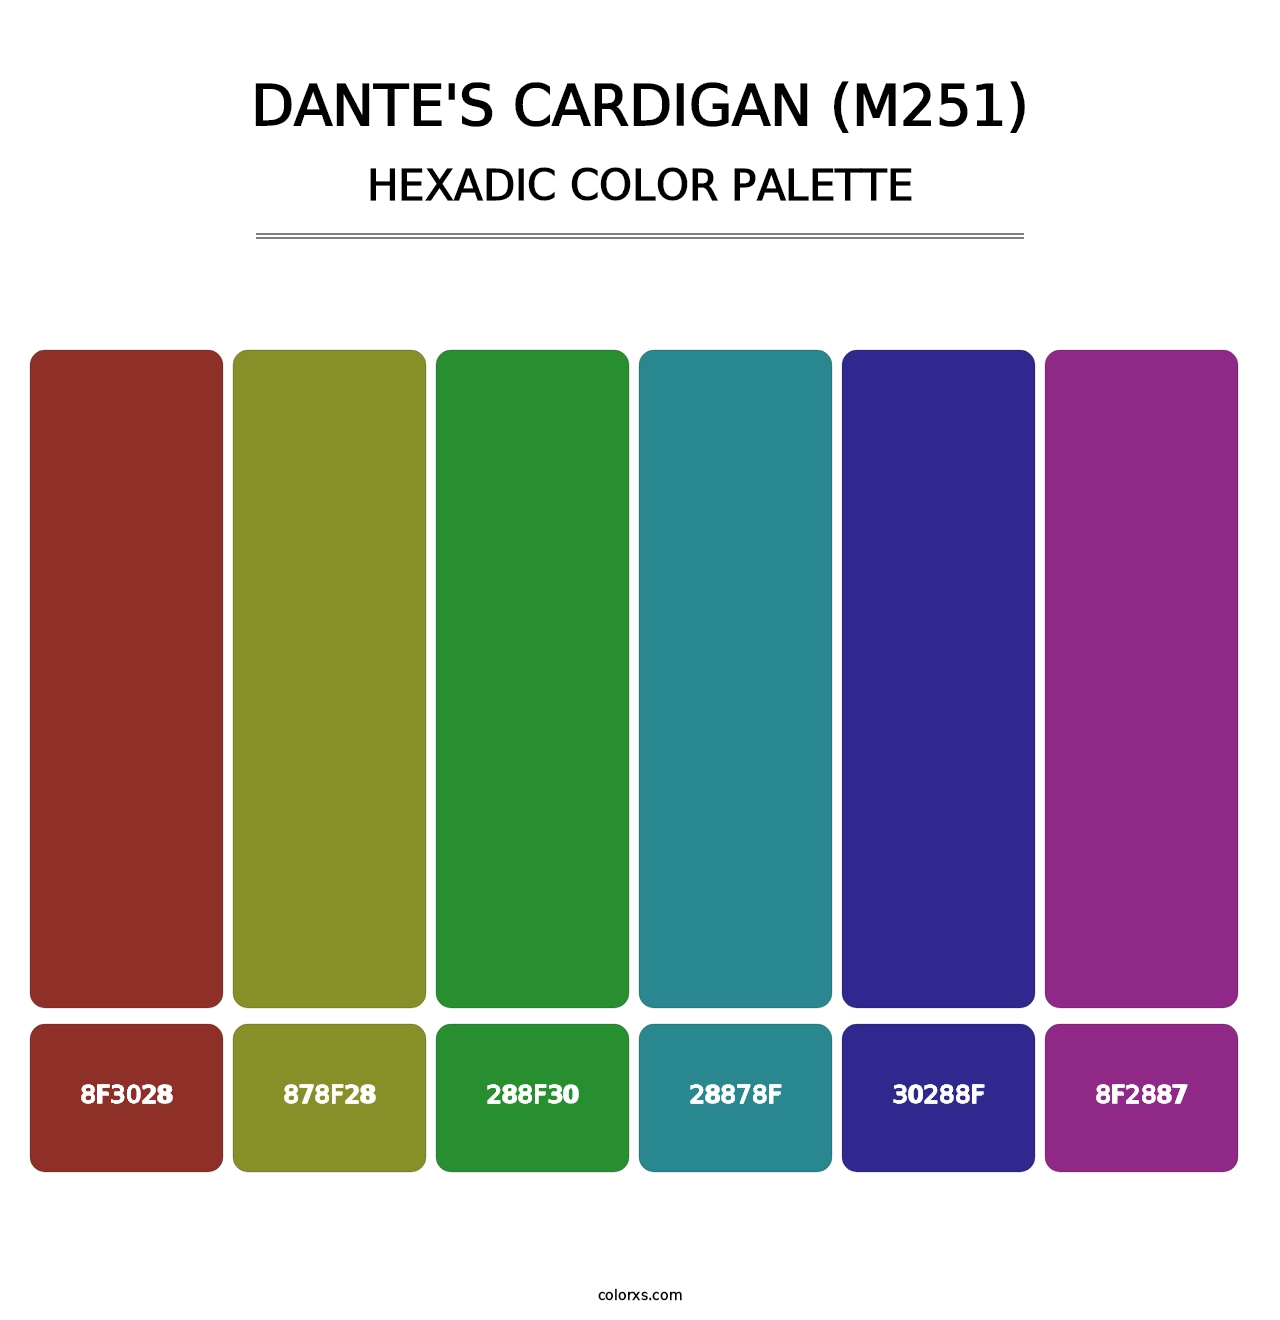 Dante's Cardigan (M251) - Hexadic Color Palette